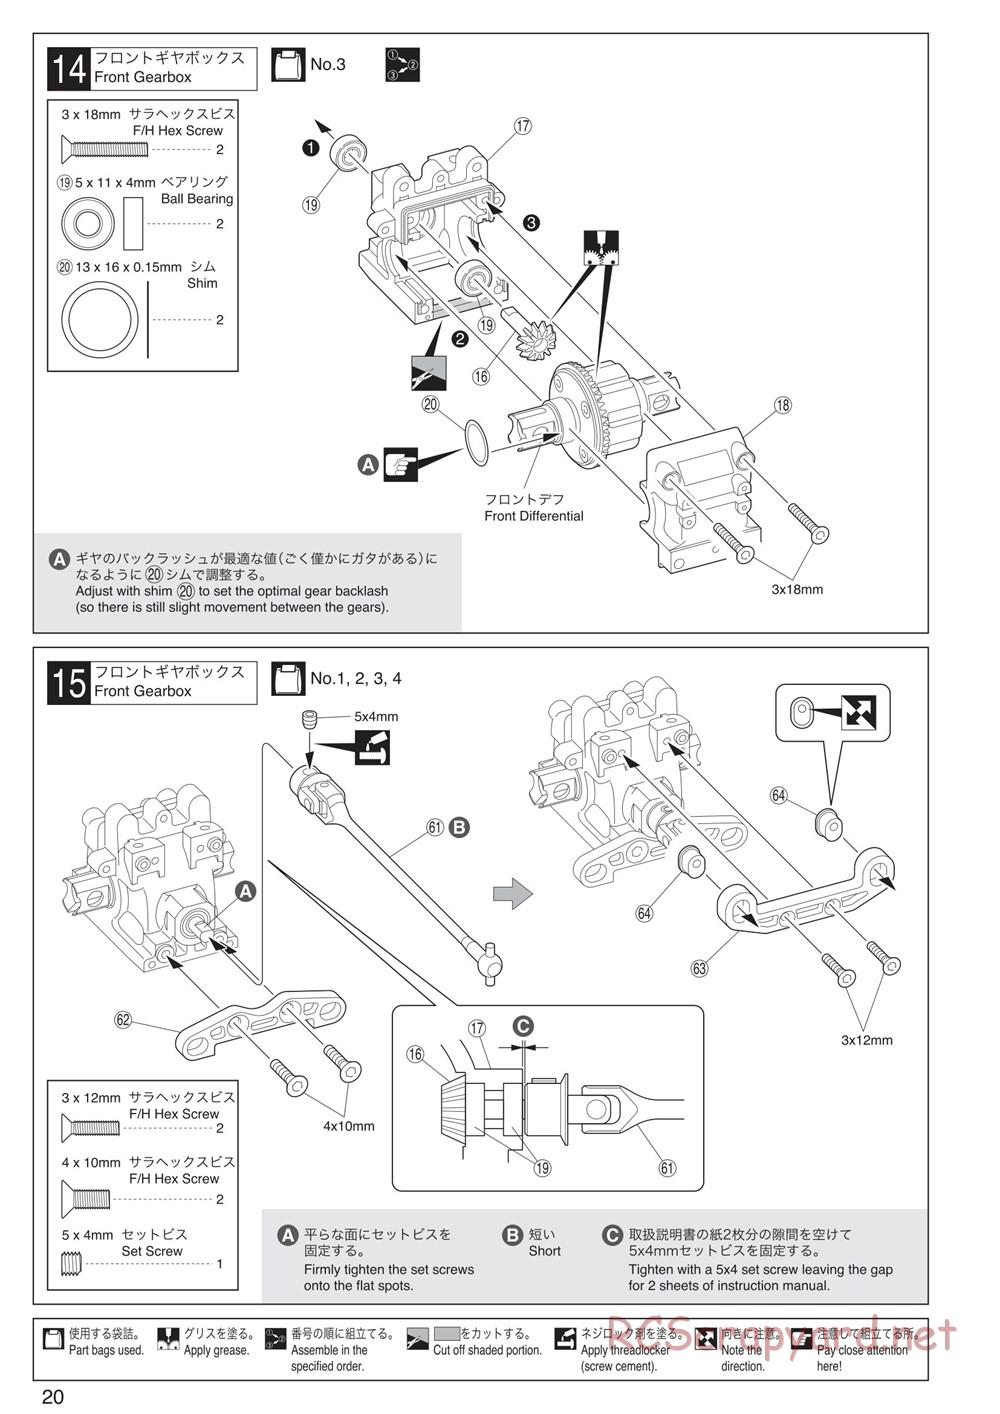 Kyosho - Inferno MP9 TKI3 - Manual - Page 20